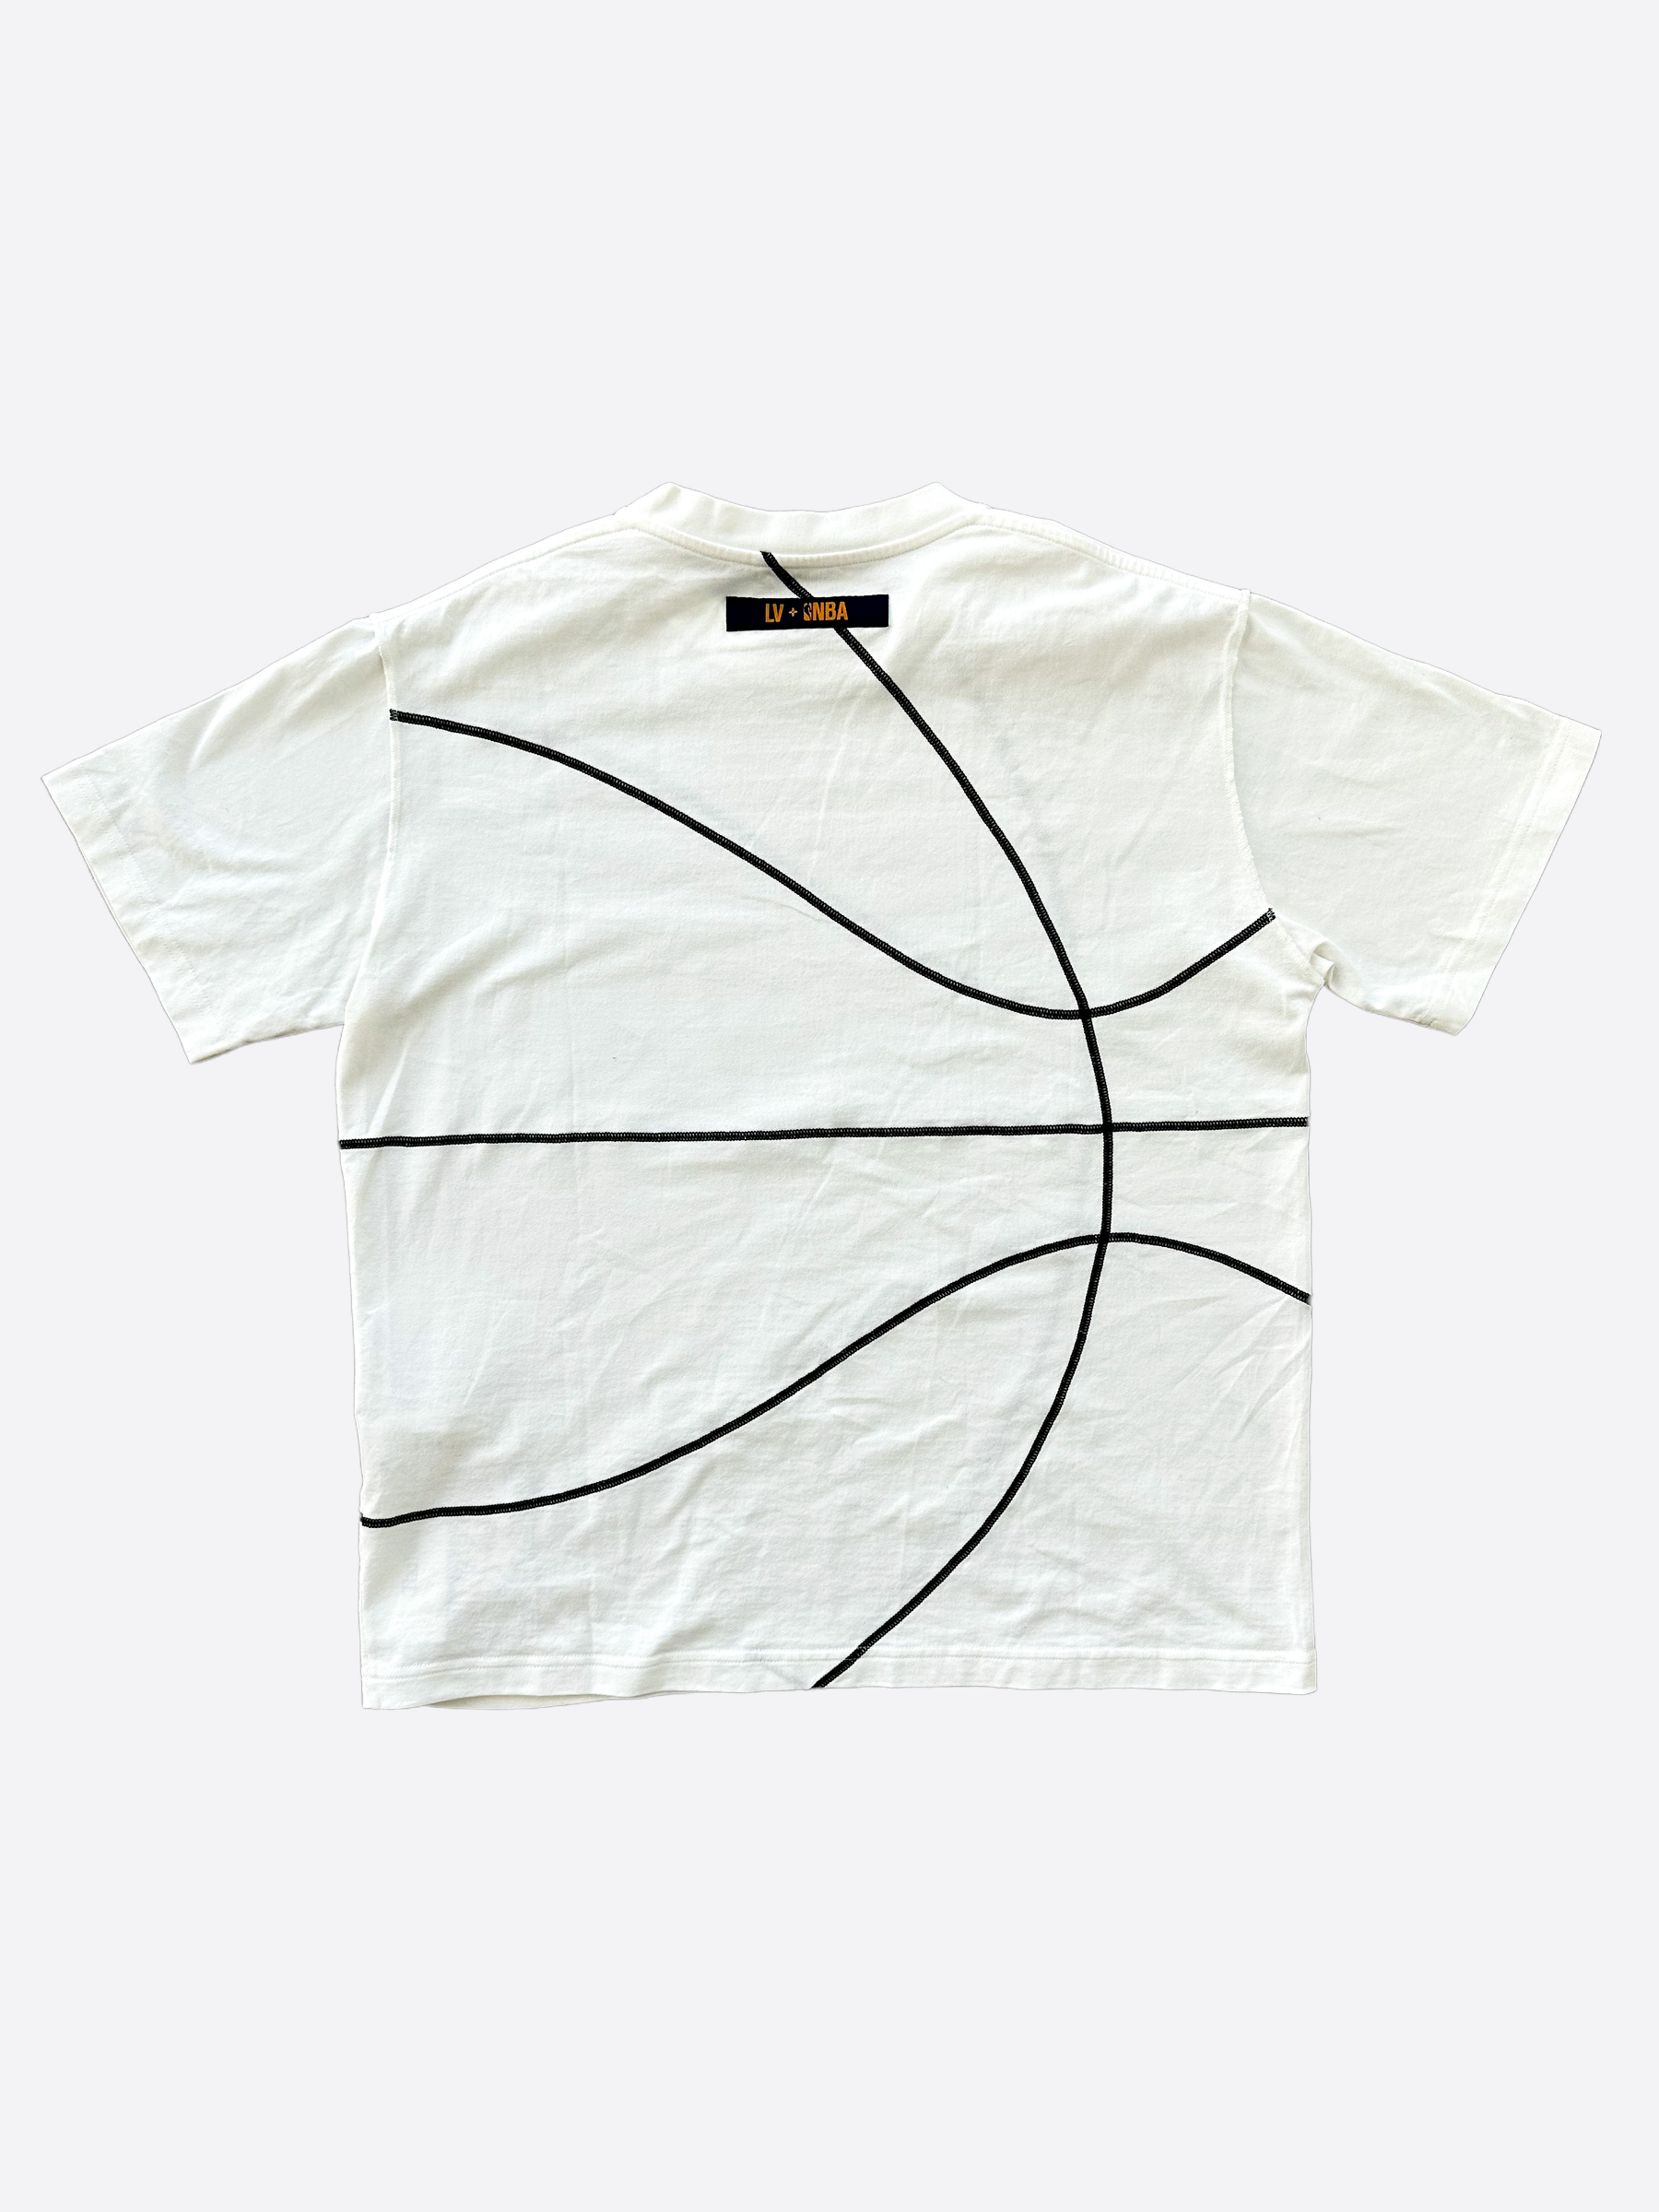 Louis Vuitton NBA White Basketball Print T-Shirt